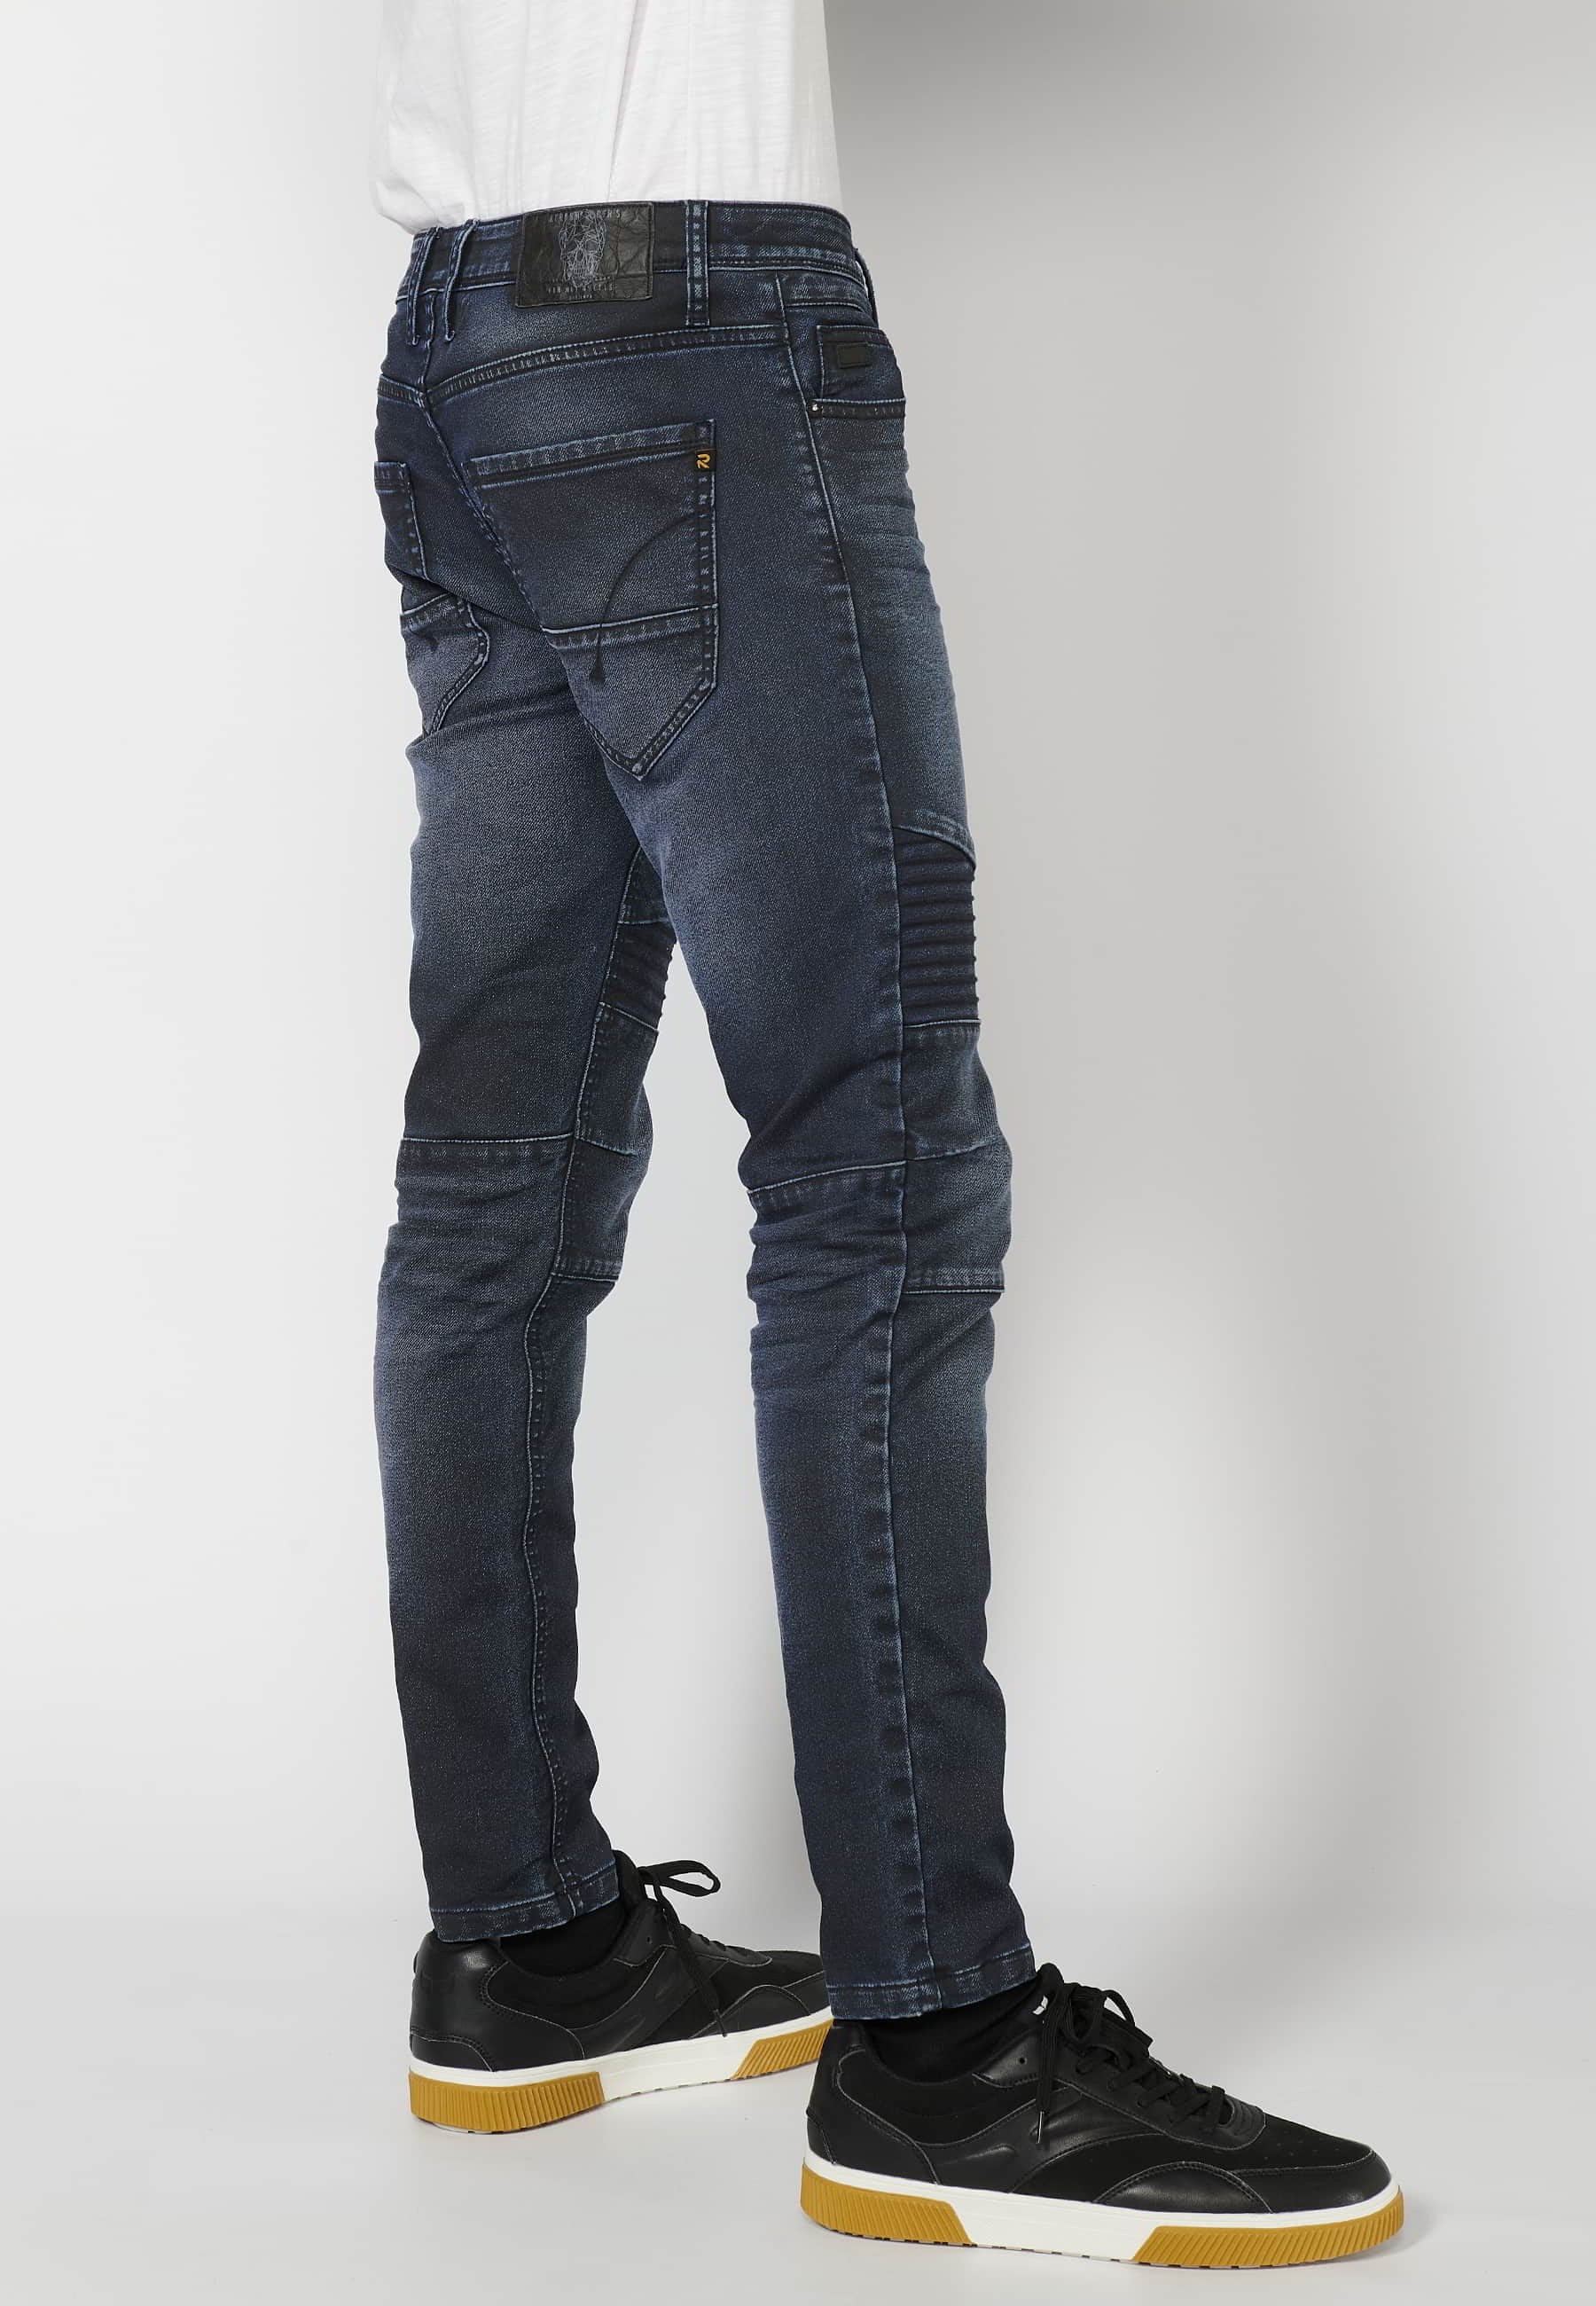 Dunkelblaue, lange Skinny-Jeans für Herren 5